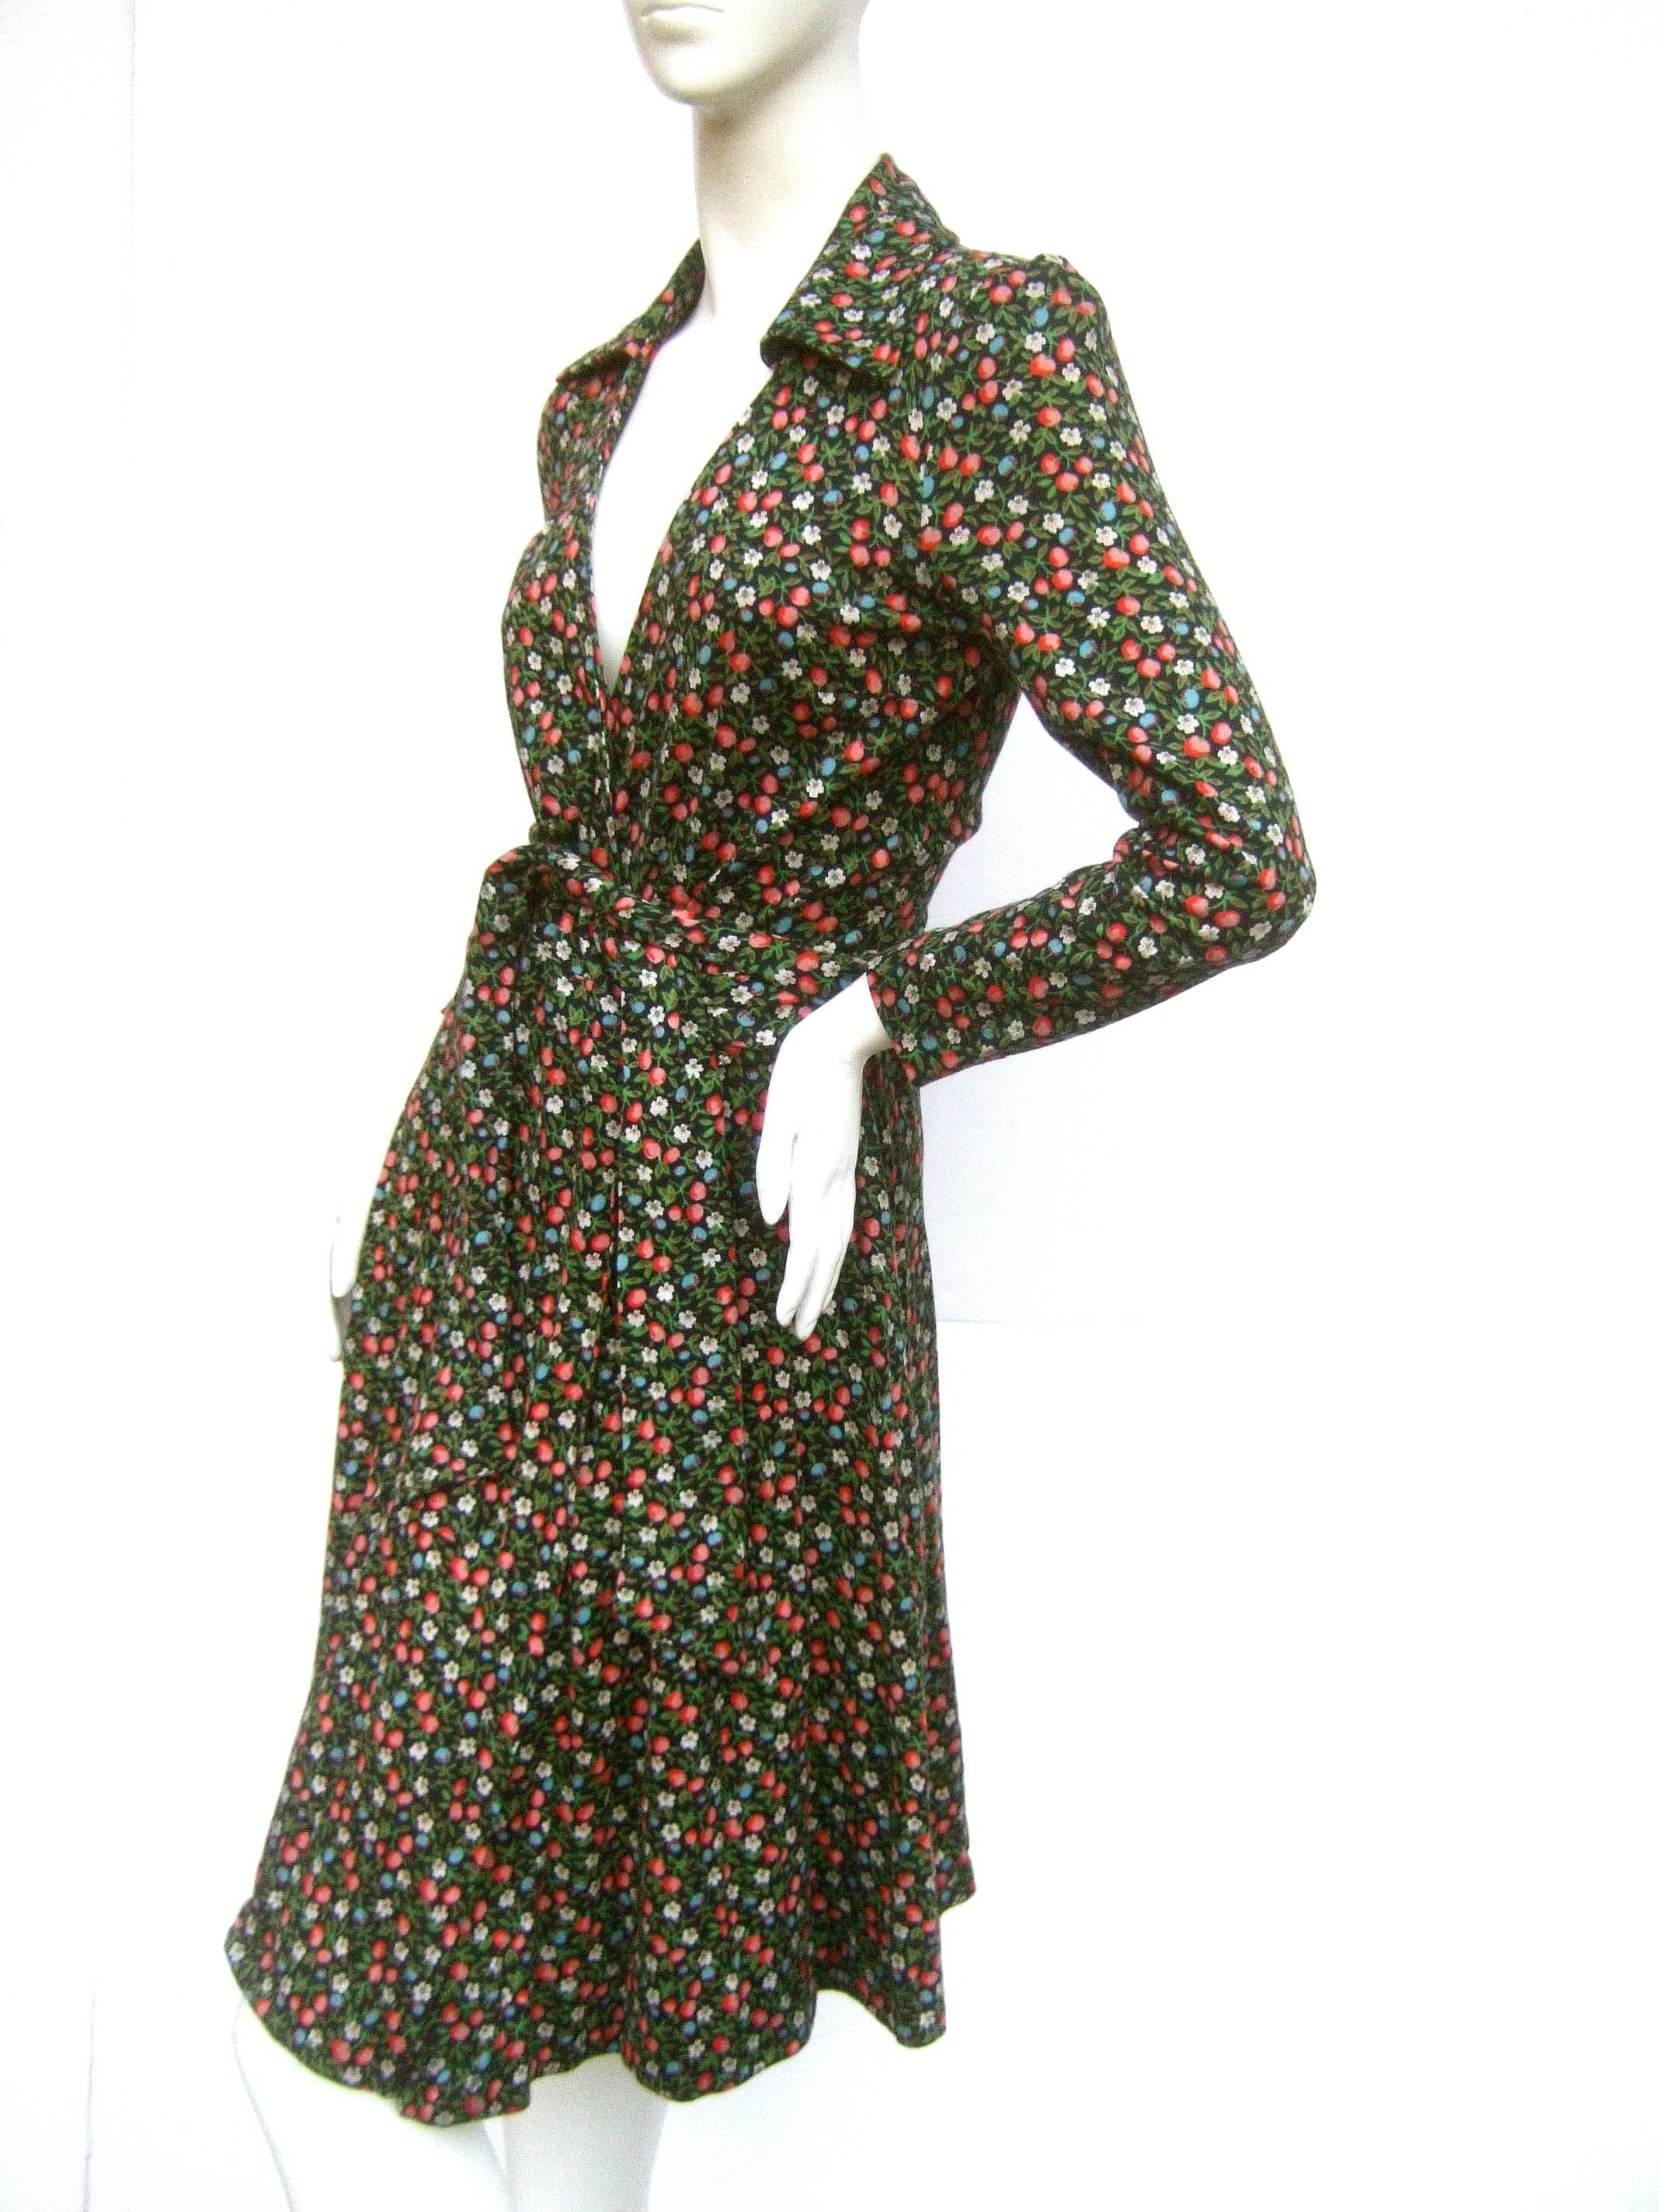 Diane von Furstenberg Iconic Floral Print Italian Wrap Dress c 1970s 1